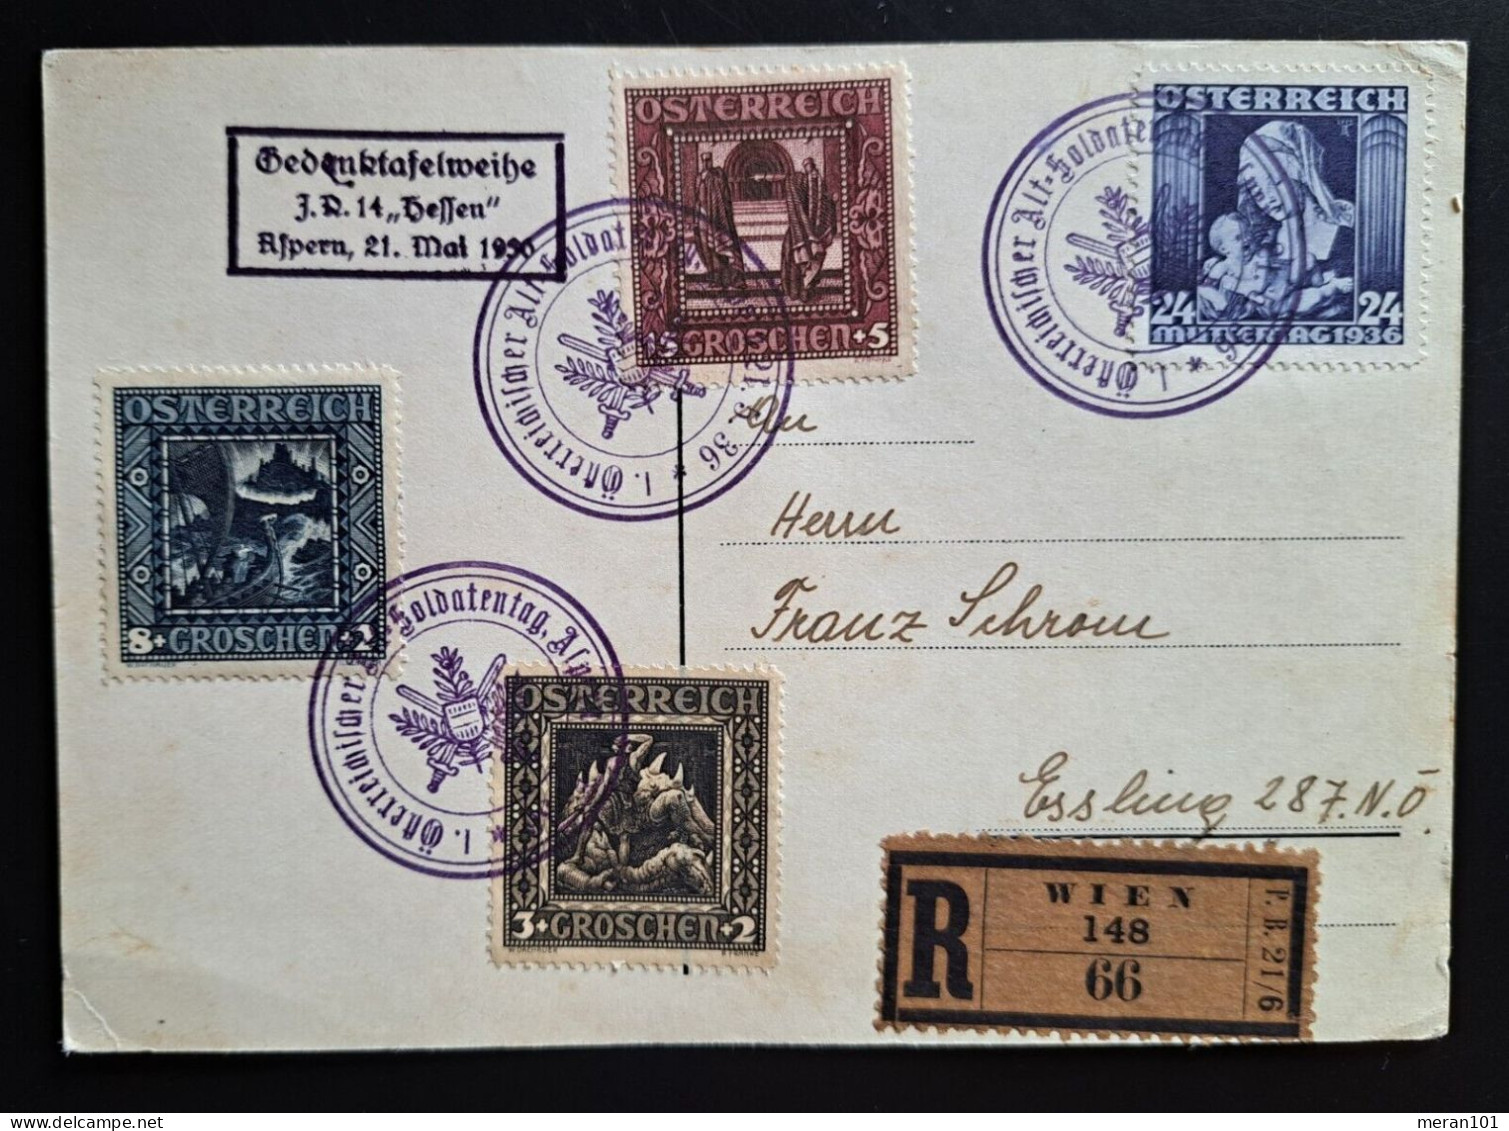 Österreich 1936, Reko-Postkarte Aspern Sonderstempel Gelaufen Essling - Covers & Documents